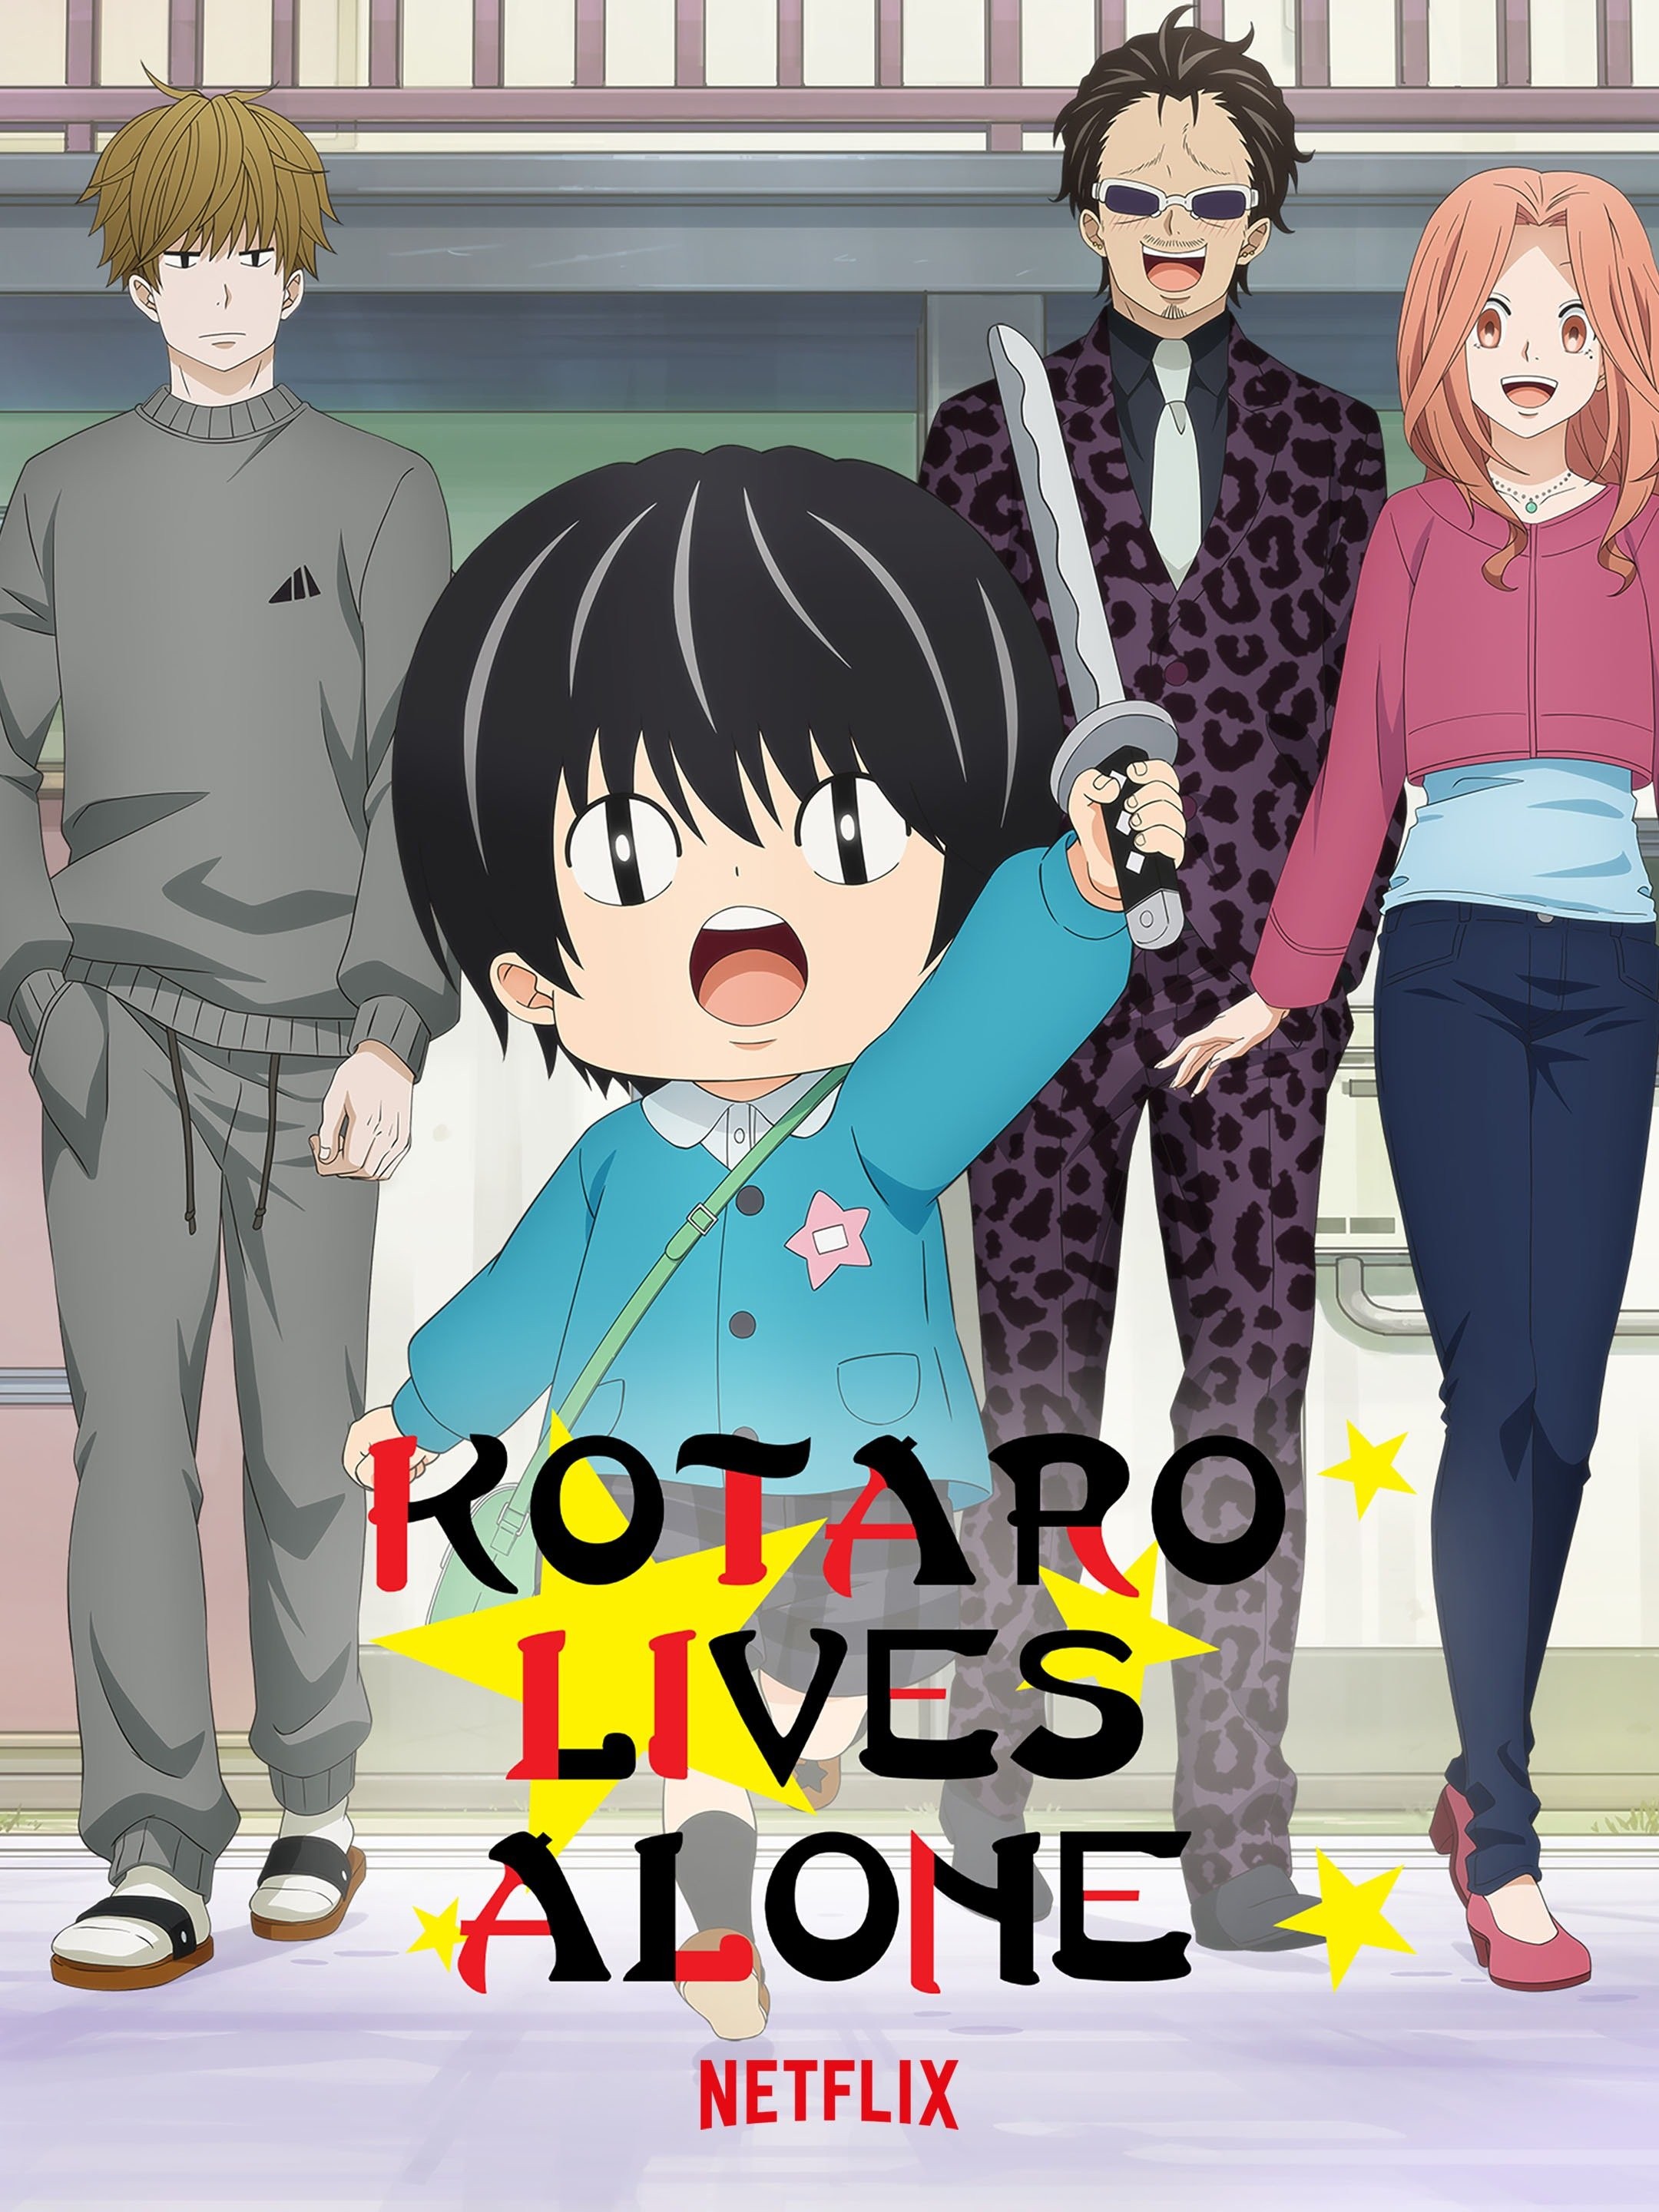 Kotaro Lives Alone - Rotten Tomatoes